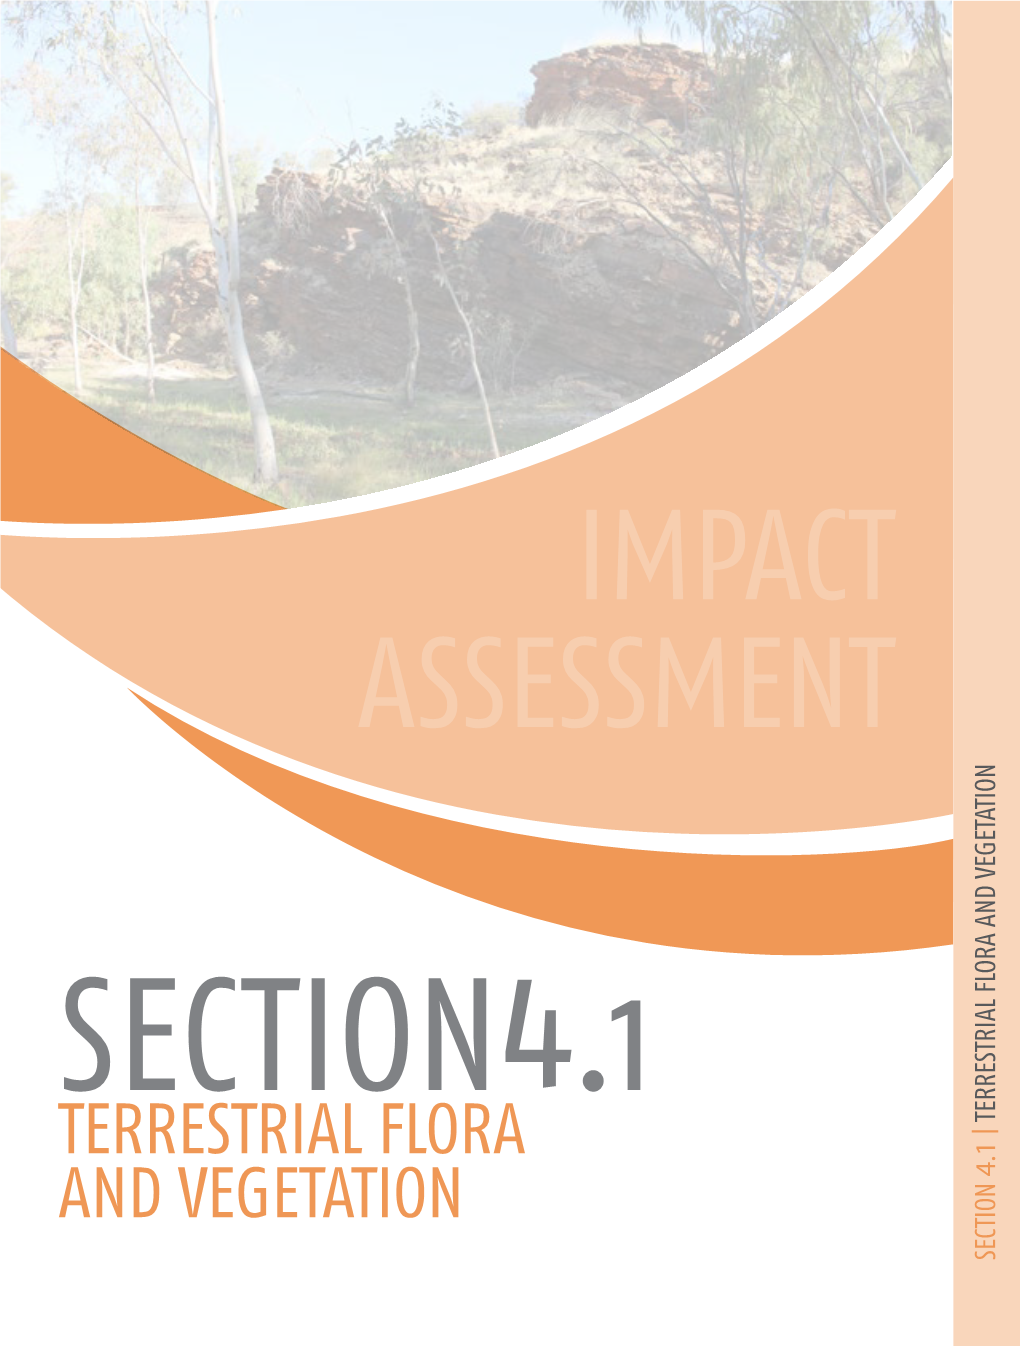 Terrestrial Flora and Vegetation Section 4.1 |